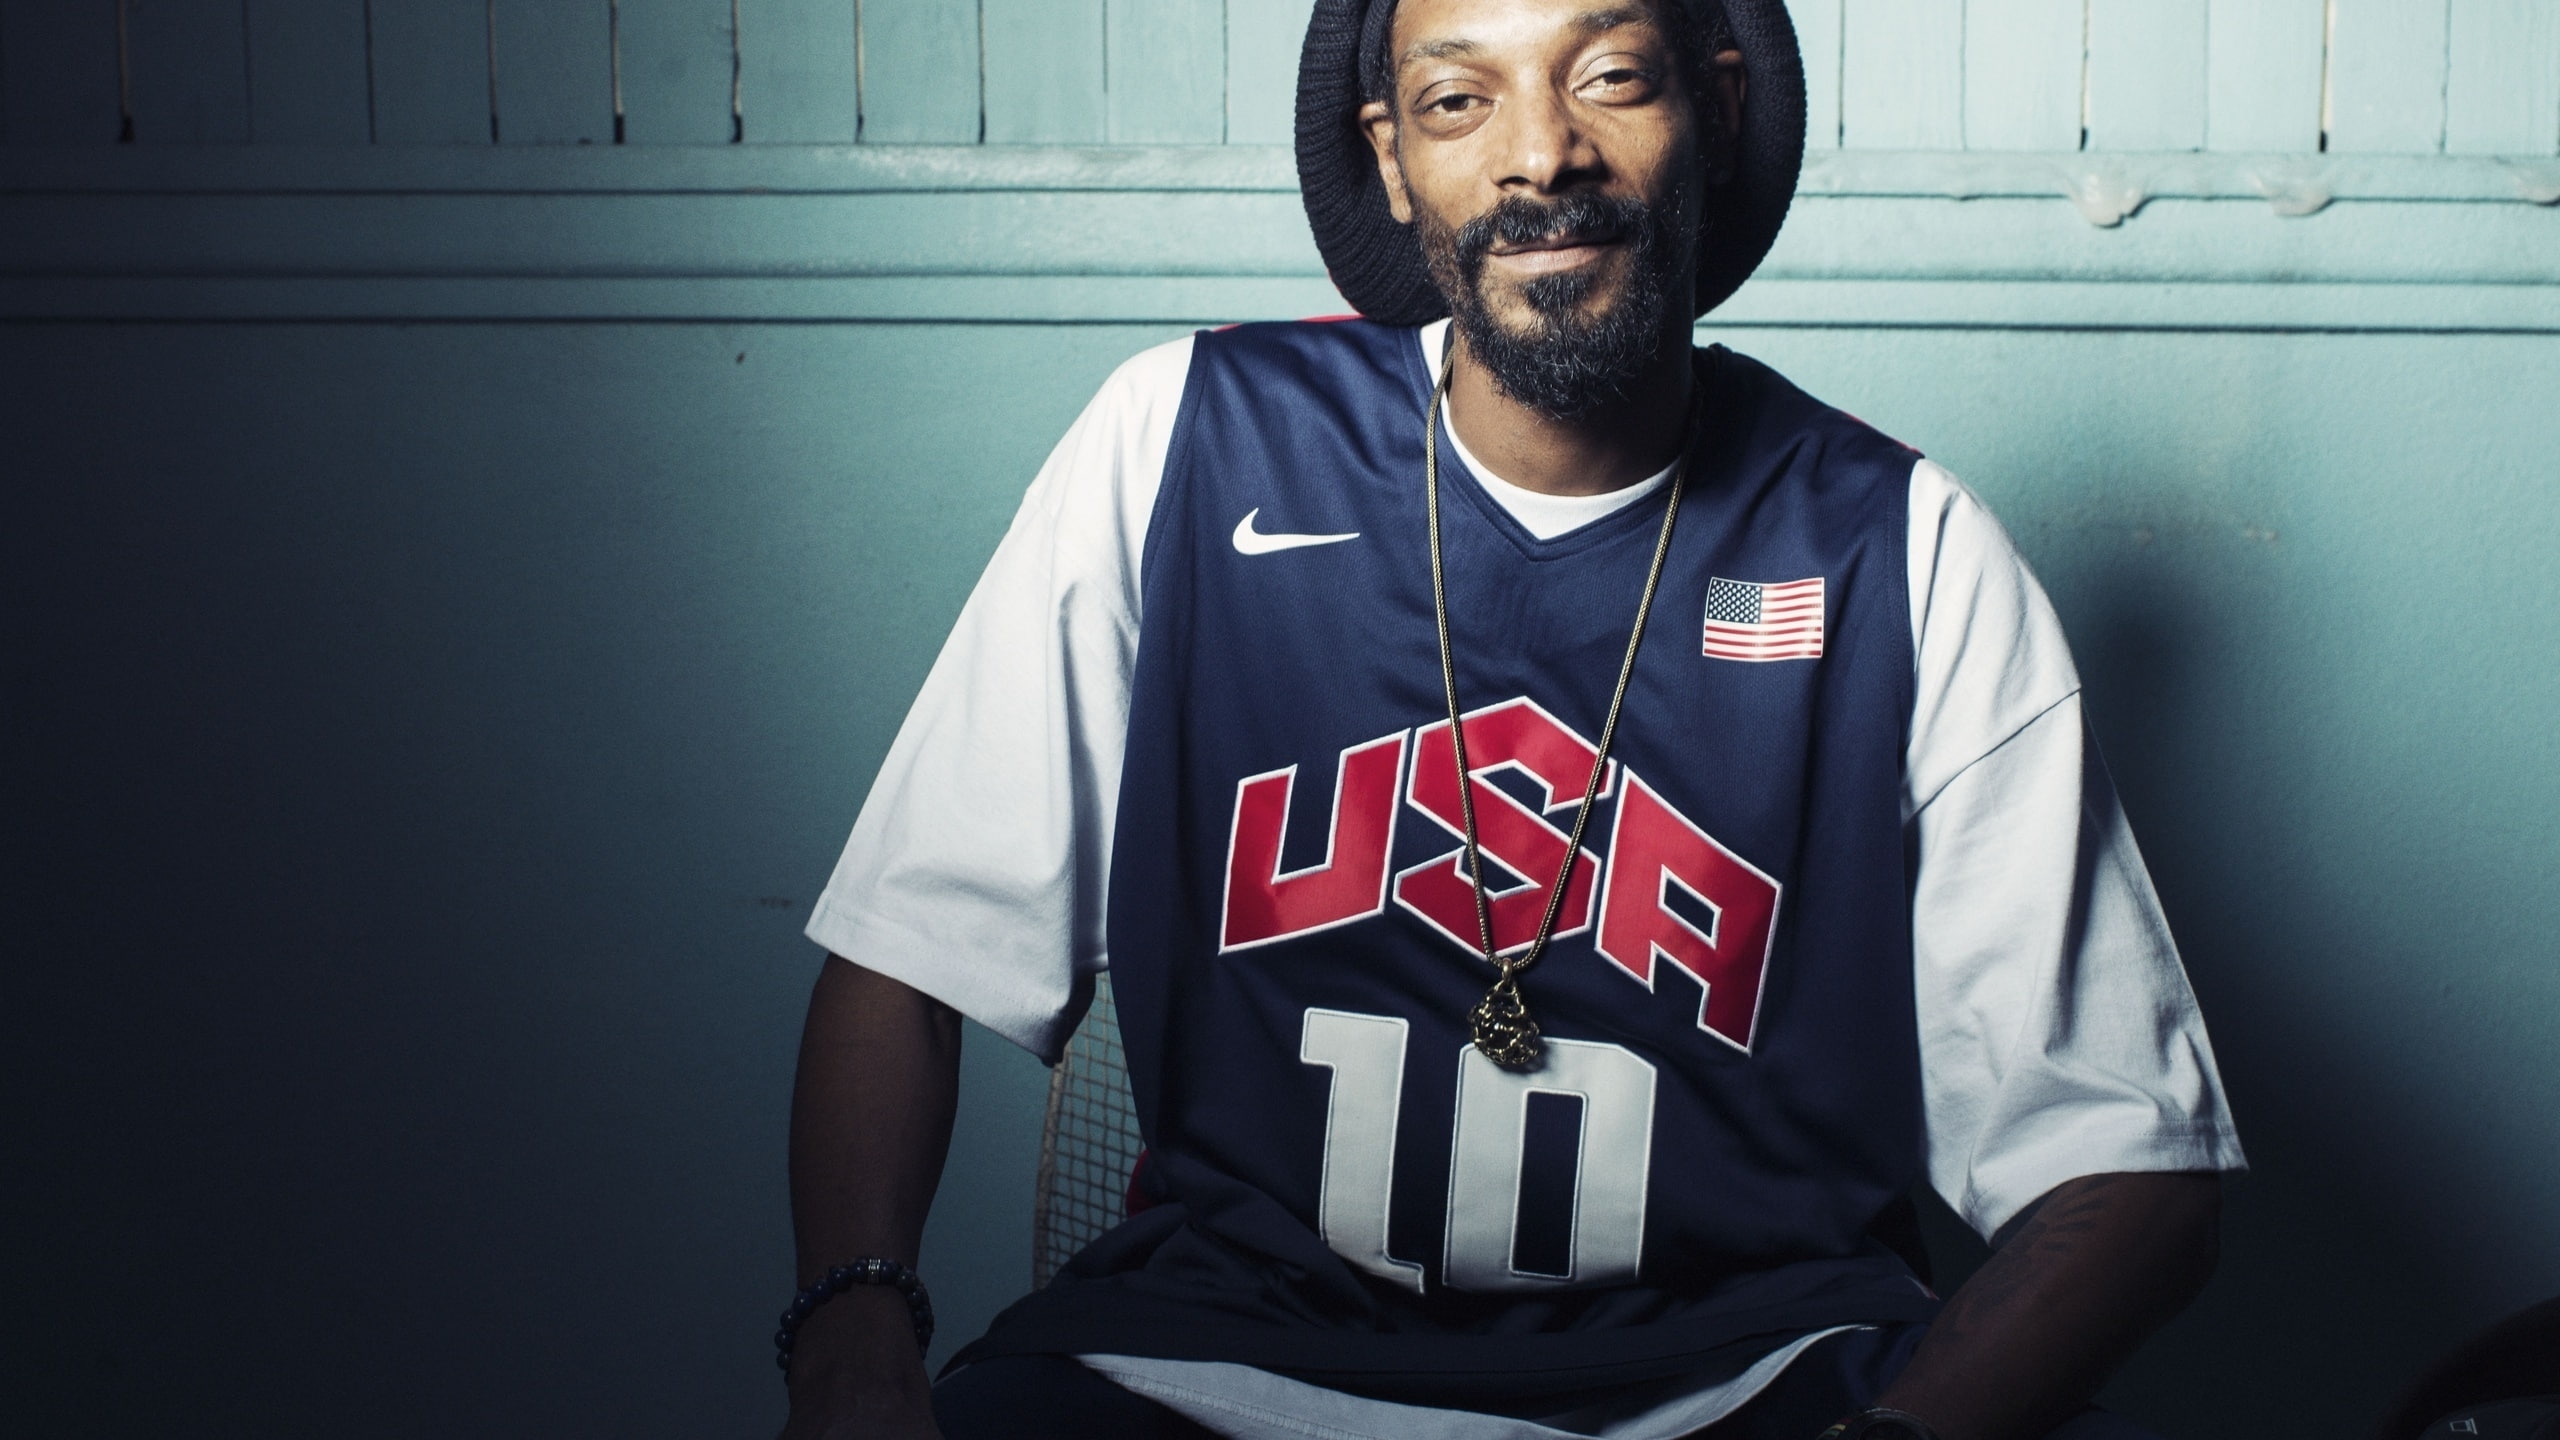 Snoop Dog Jersey, snoop dogg, photo shoot, singer